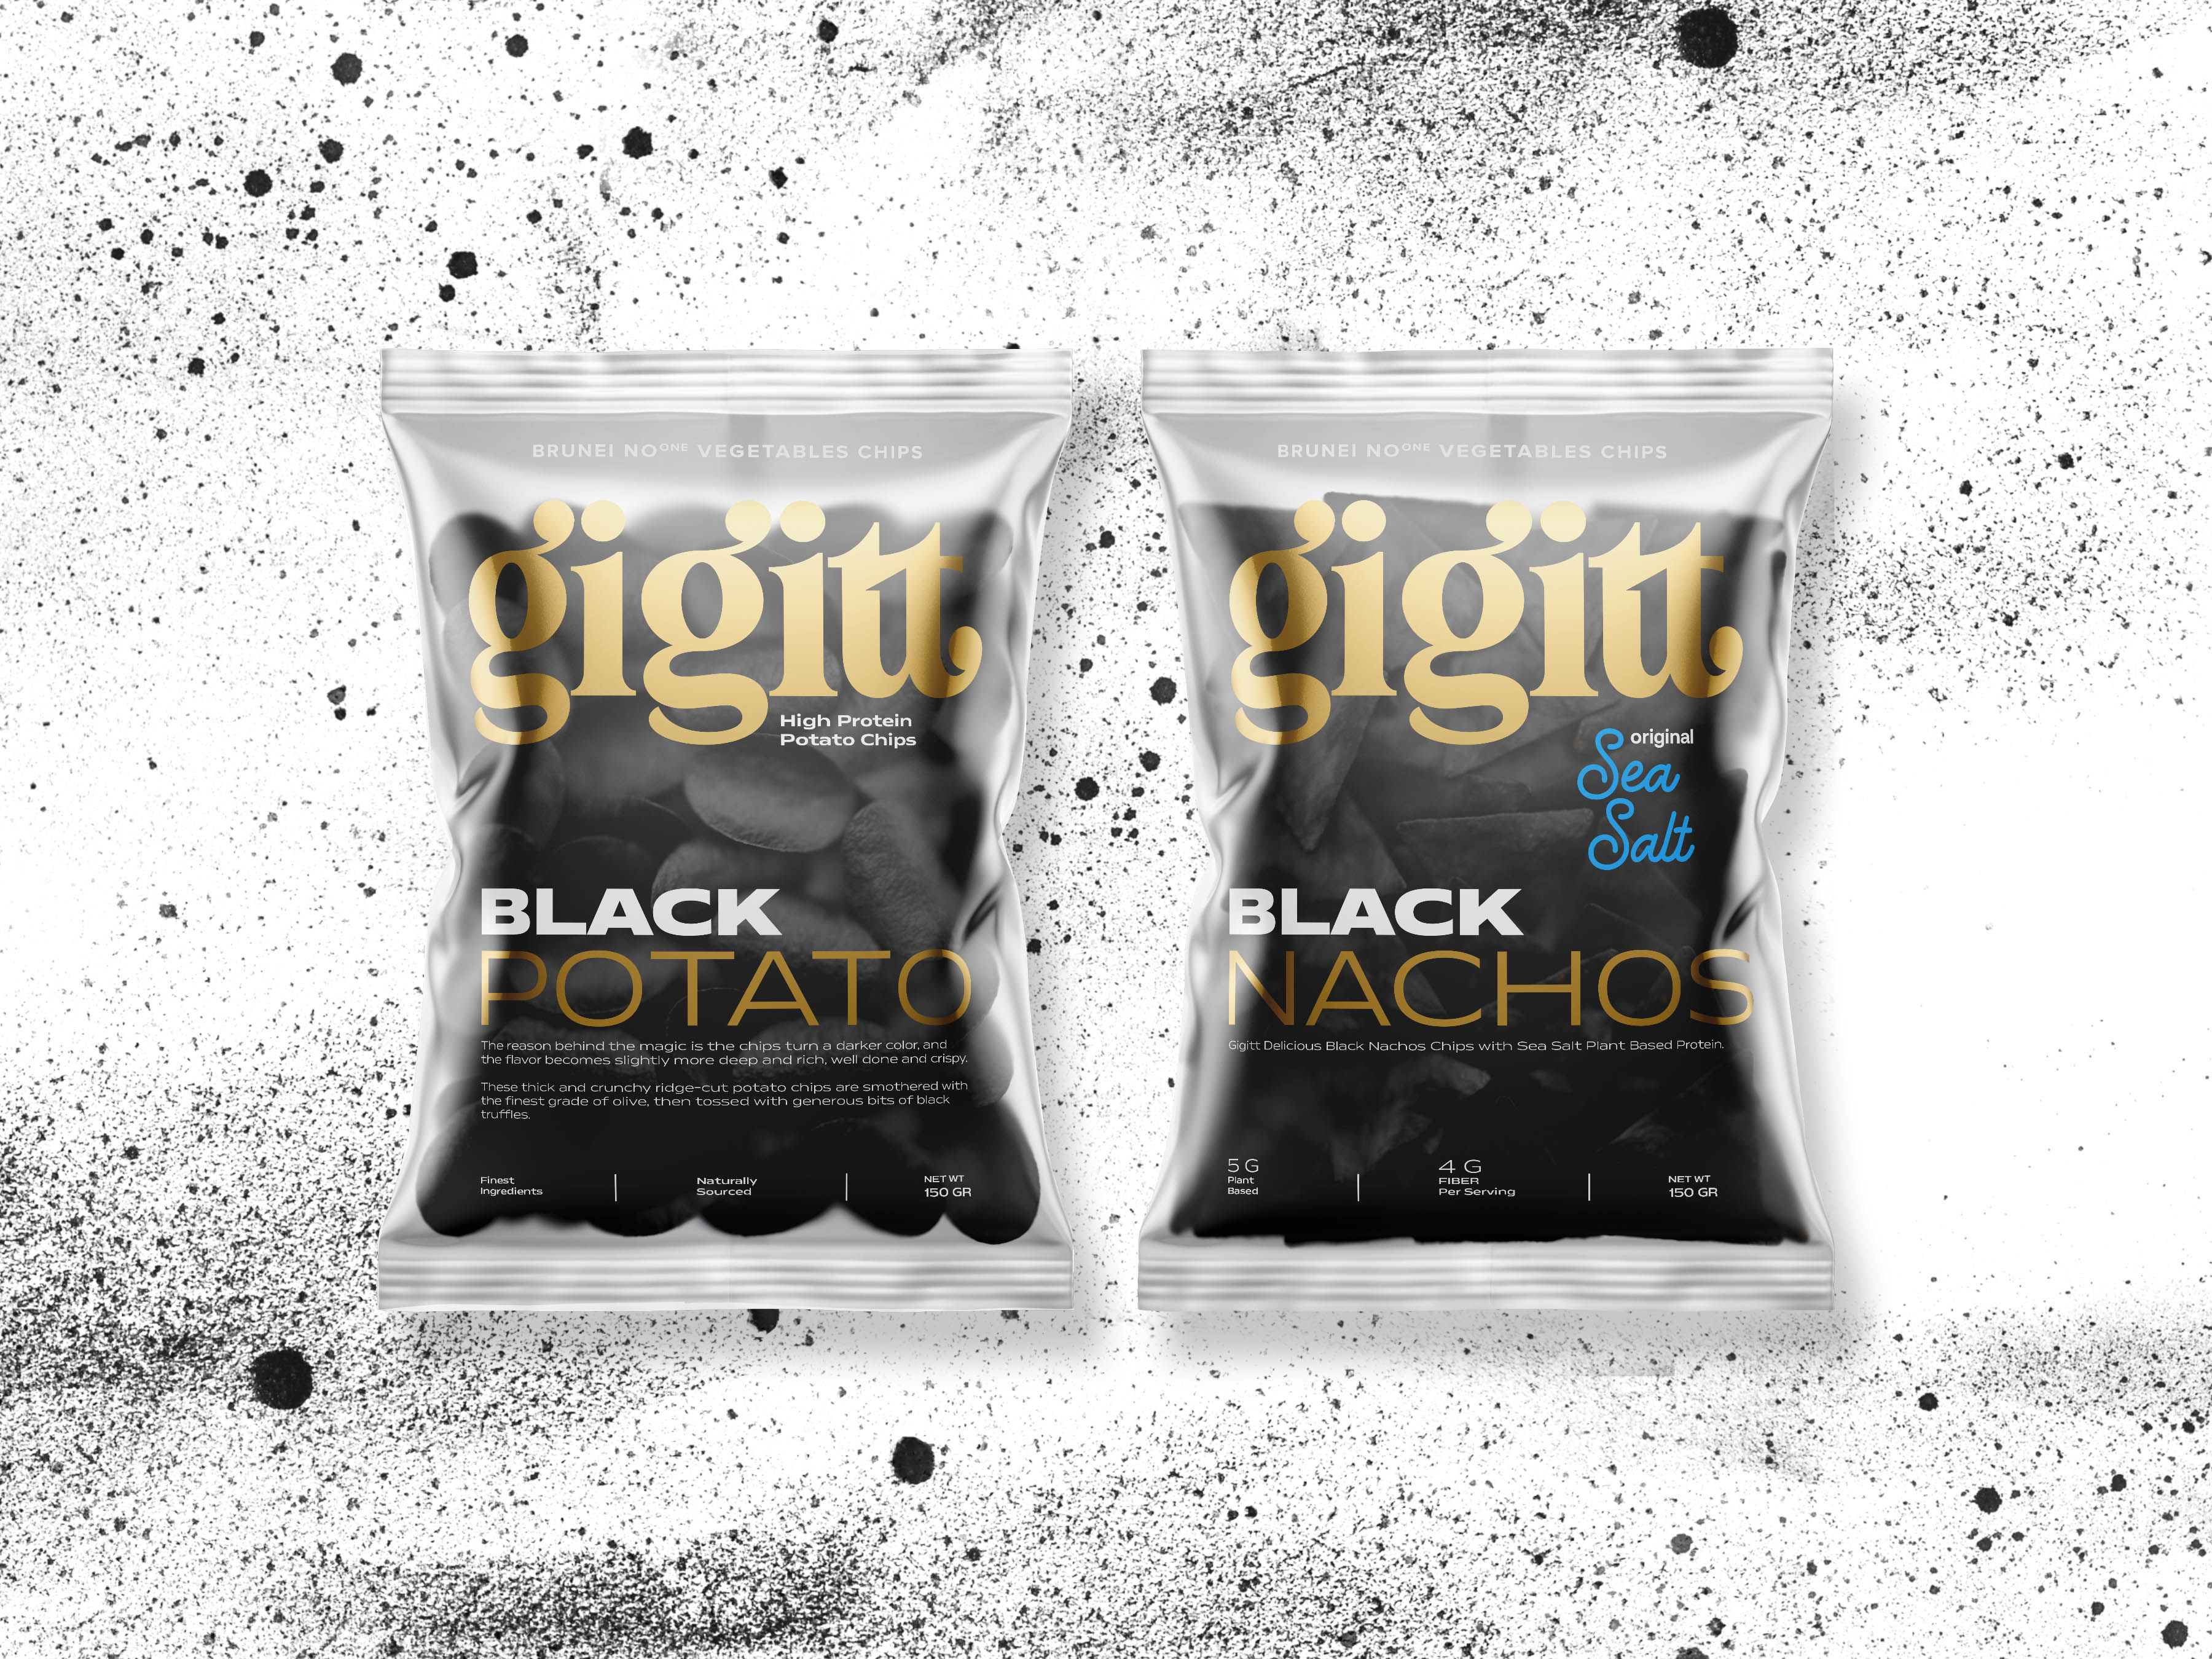 Widarto Impact Creating Design for GIGITT Black Chips Series